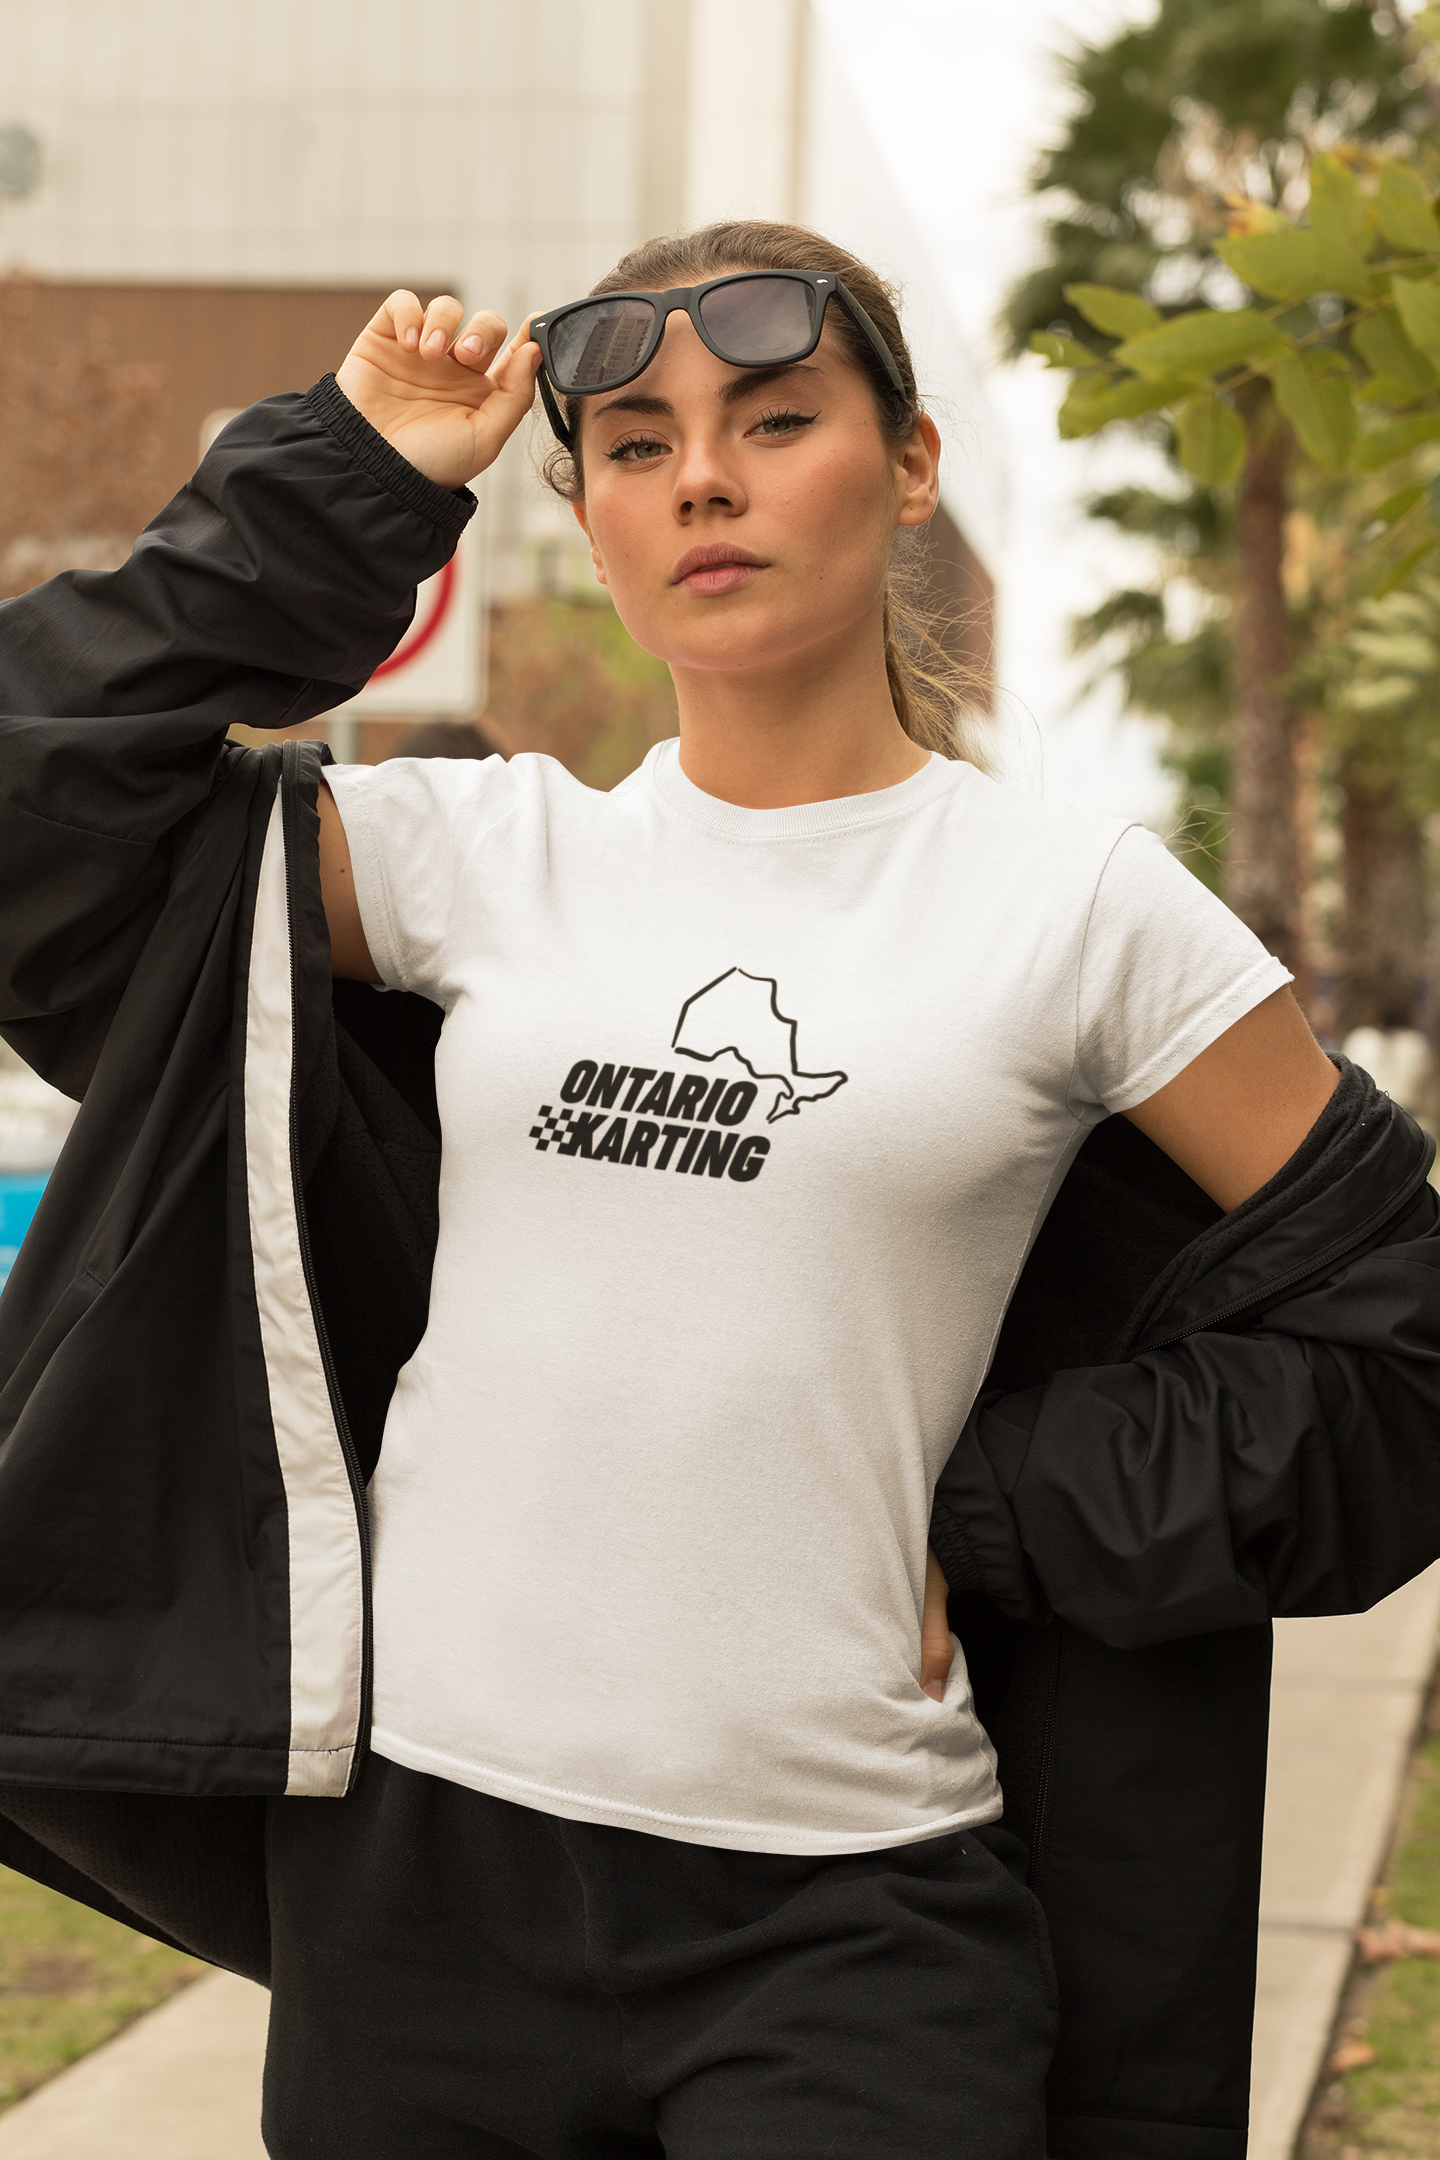 Ontario Karting Women’s T-Shirt